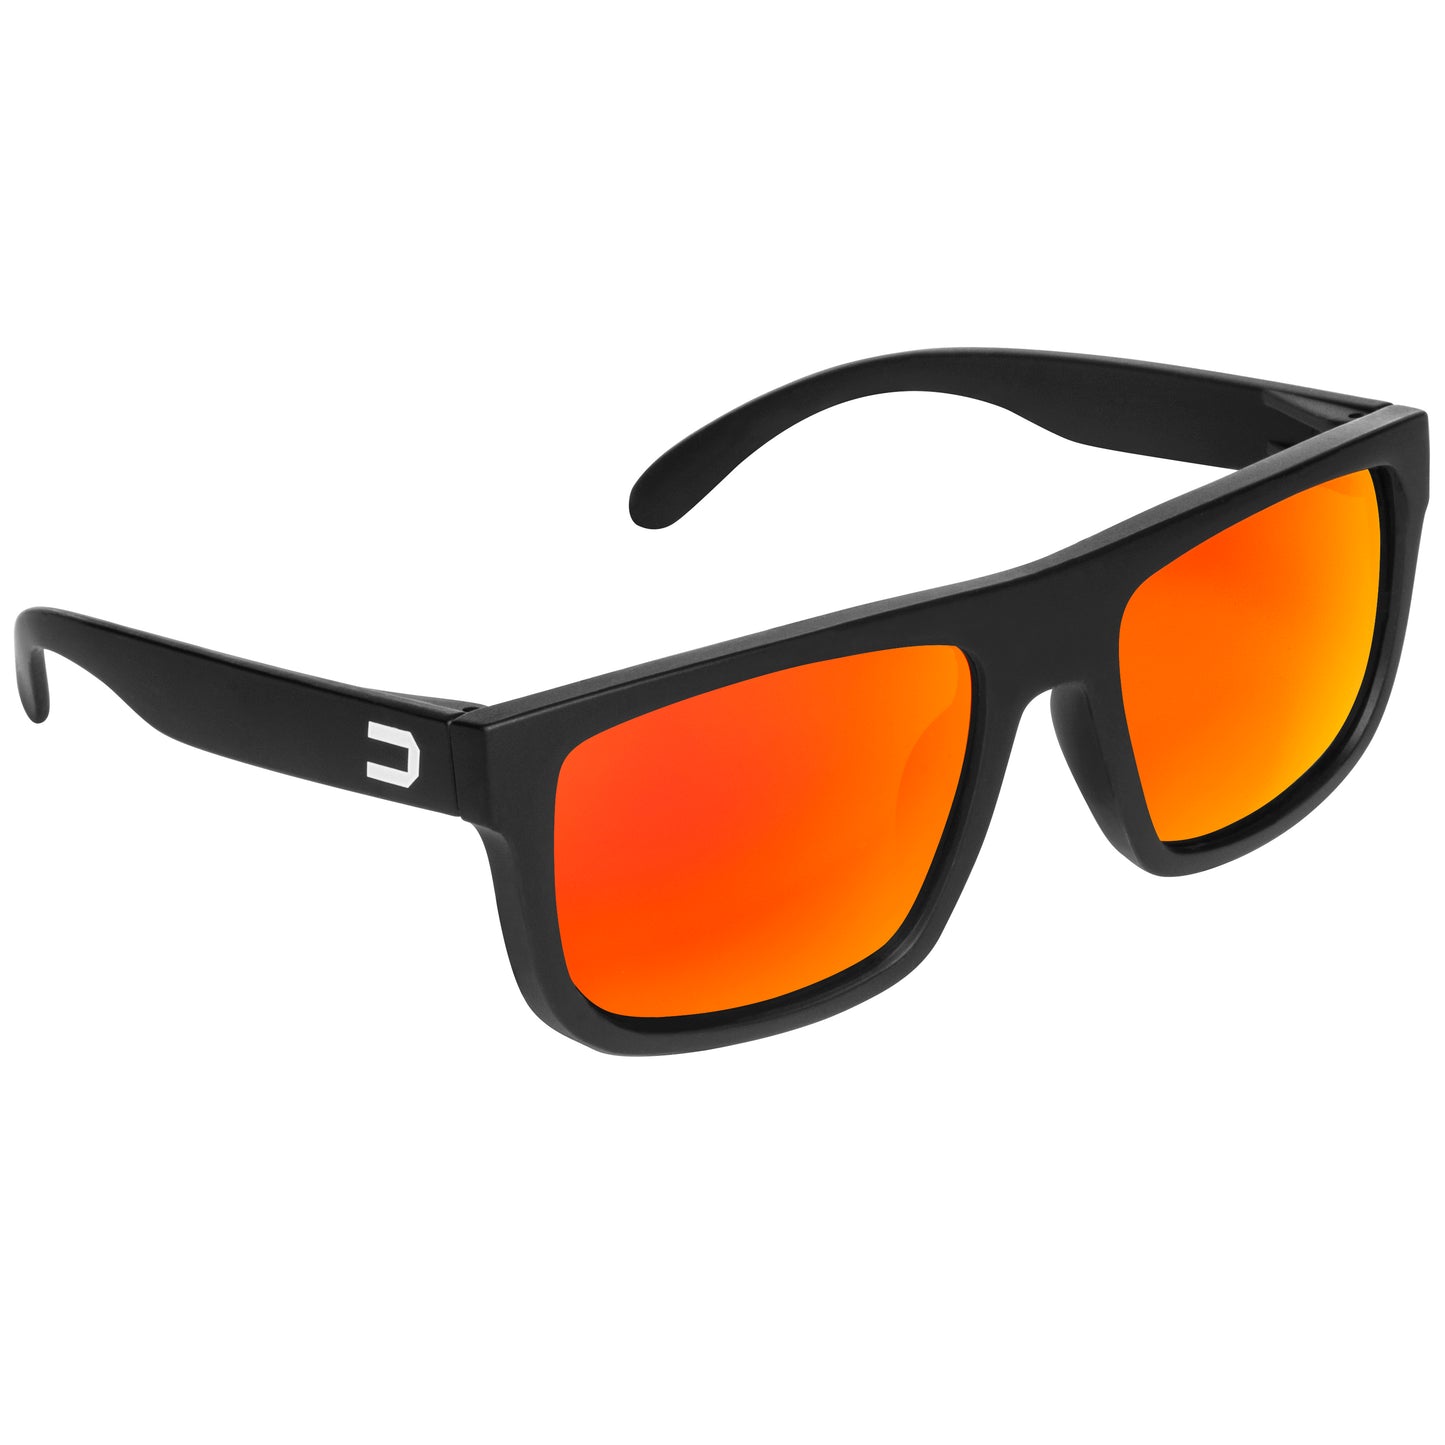 G Series Sunglasses